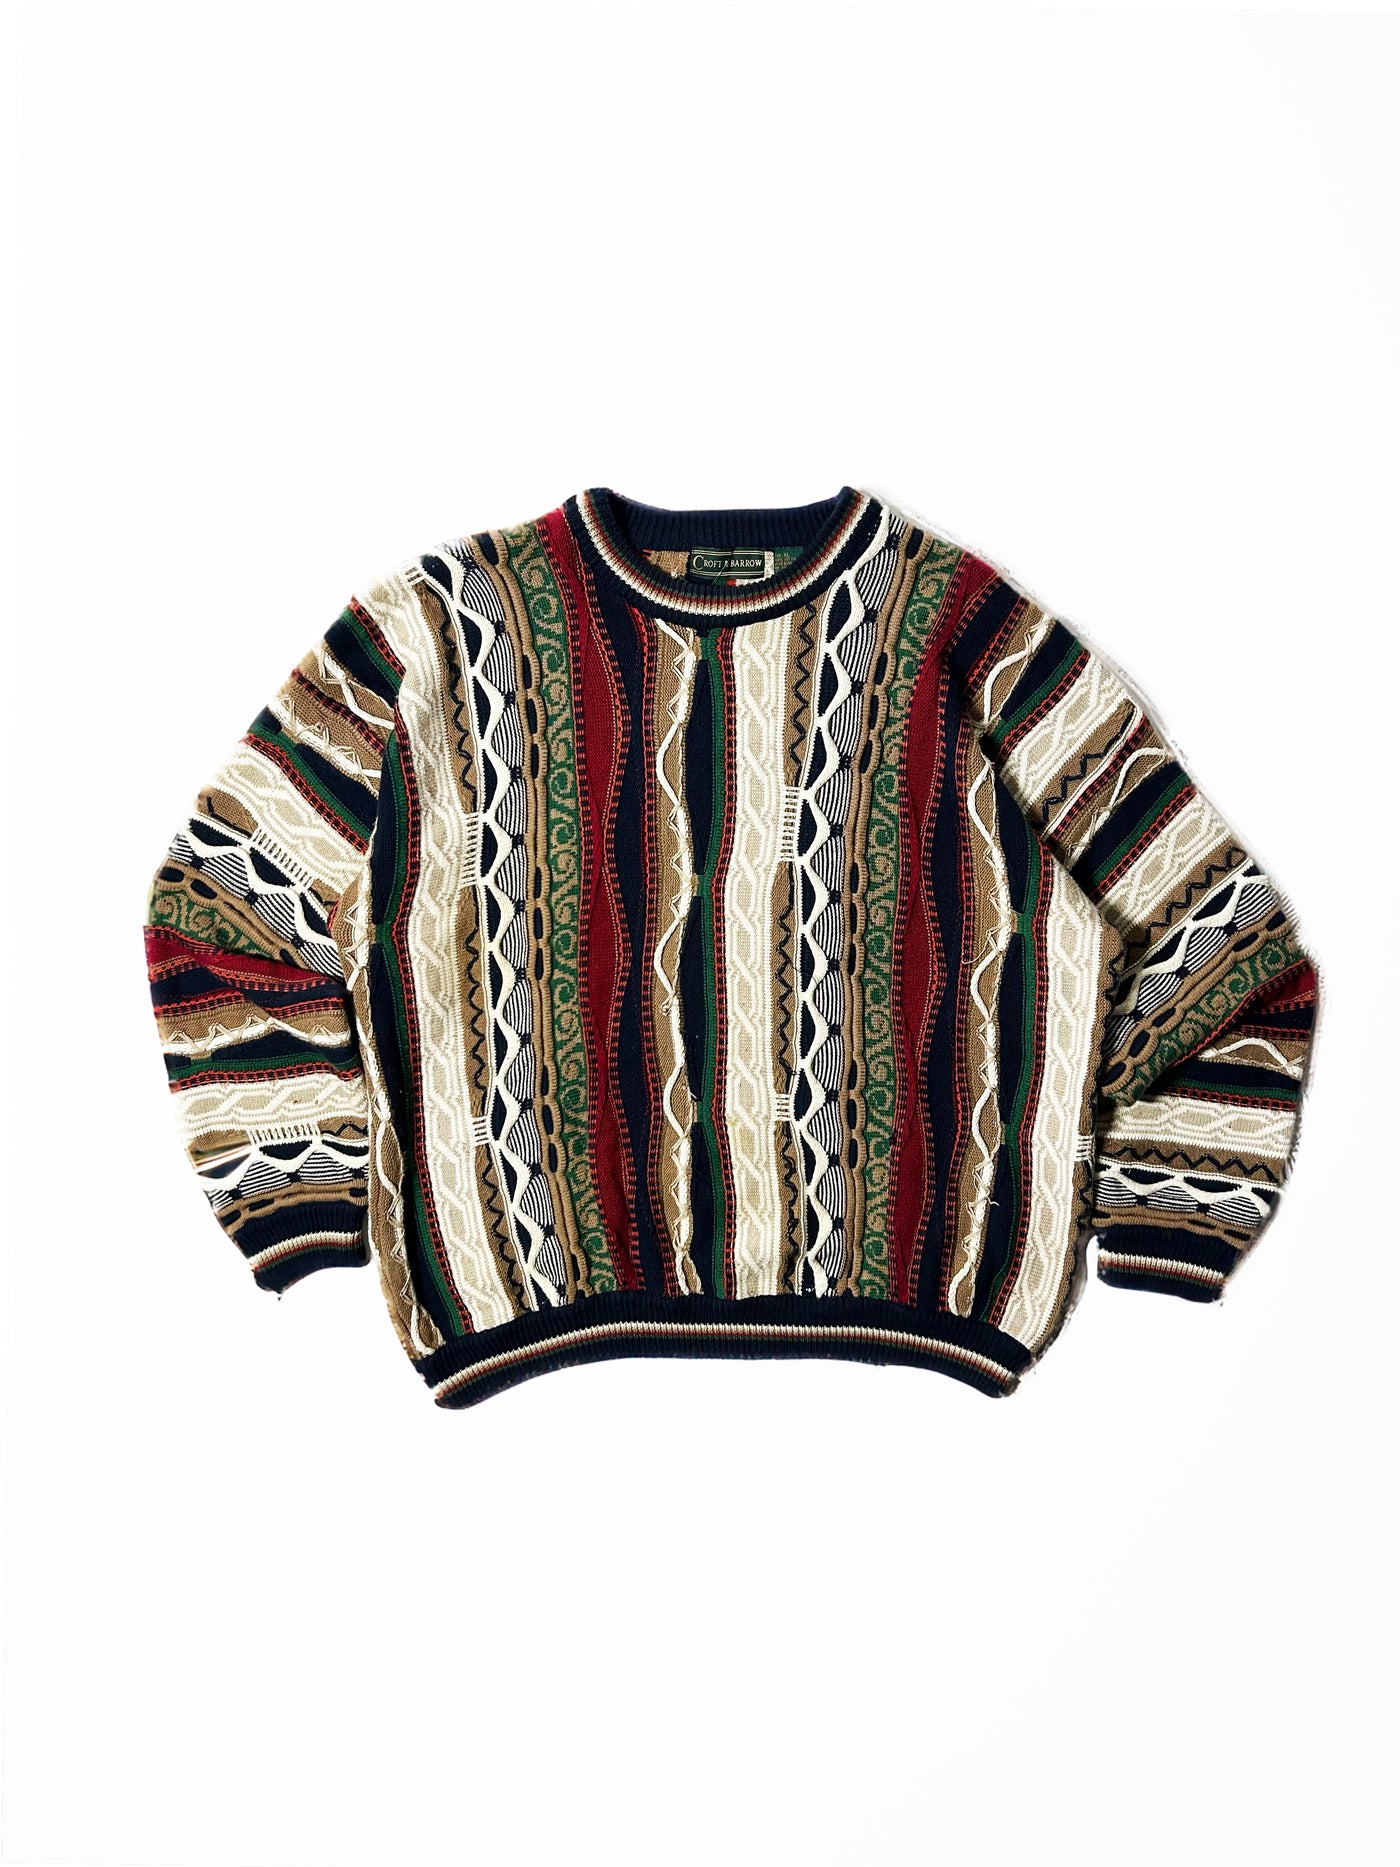 Vintage 90s Croft & Barrow Coogi Style Sweater